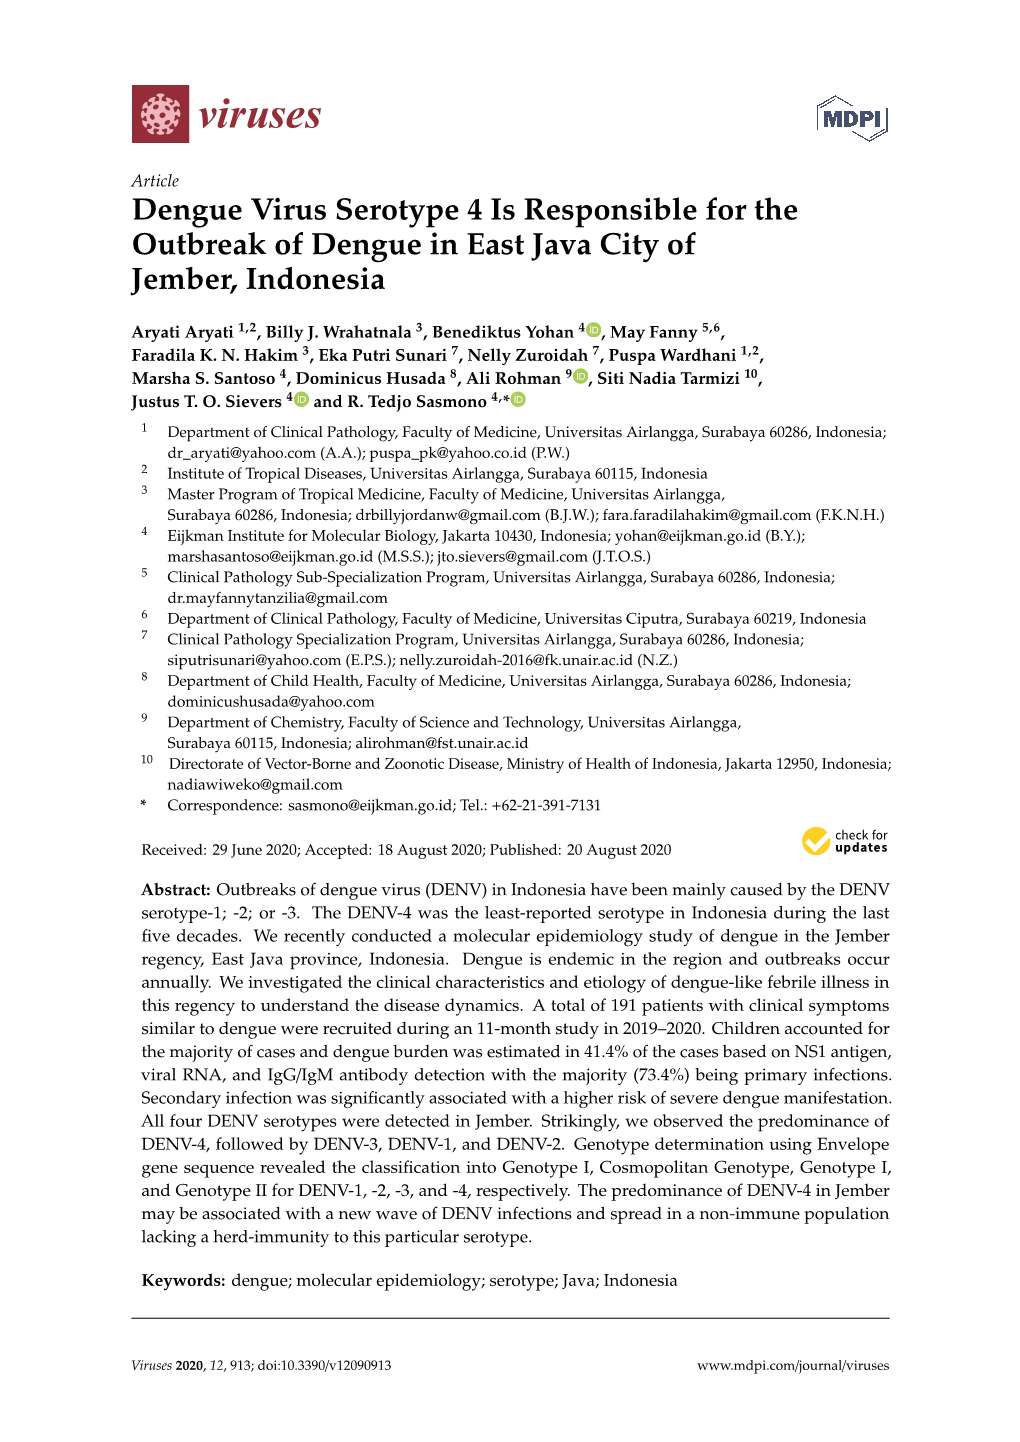 Dengue Virus Serotype 4 Is Responsible for the Outbreak of Dengue in East Java City of Jember, Indonesia